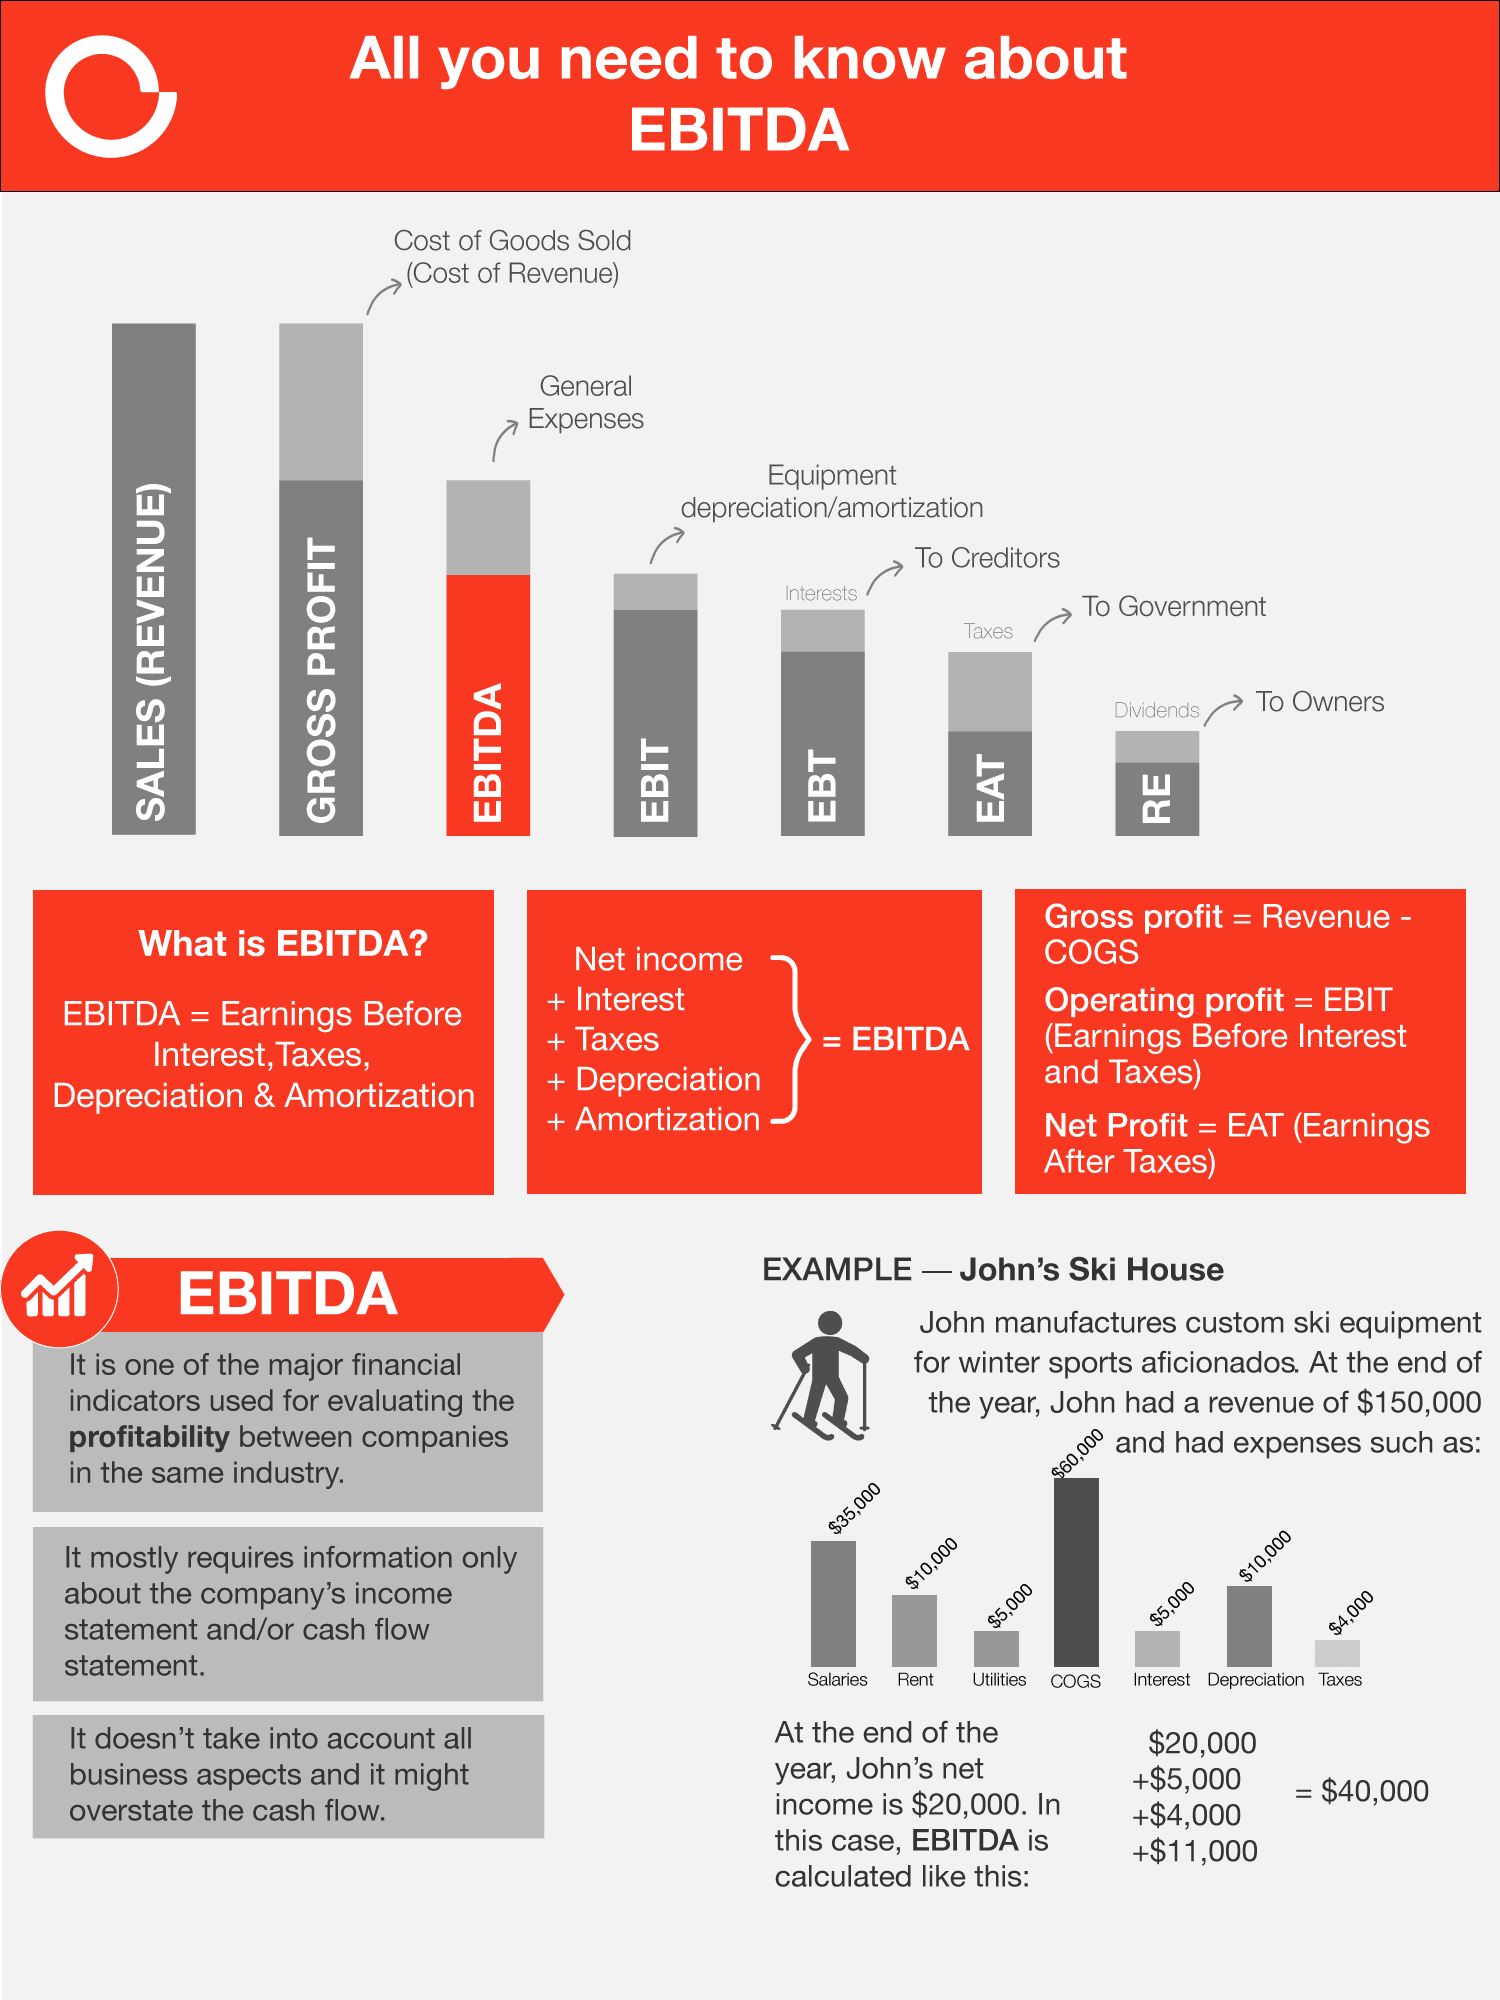 EBITDA vs. Net Profit